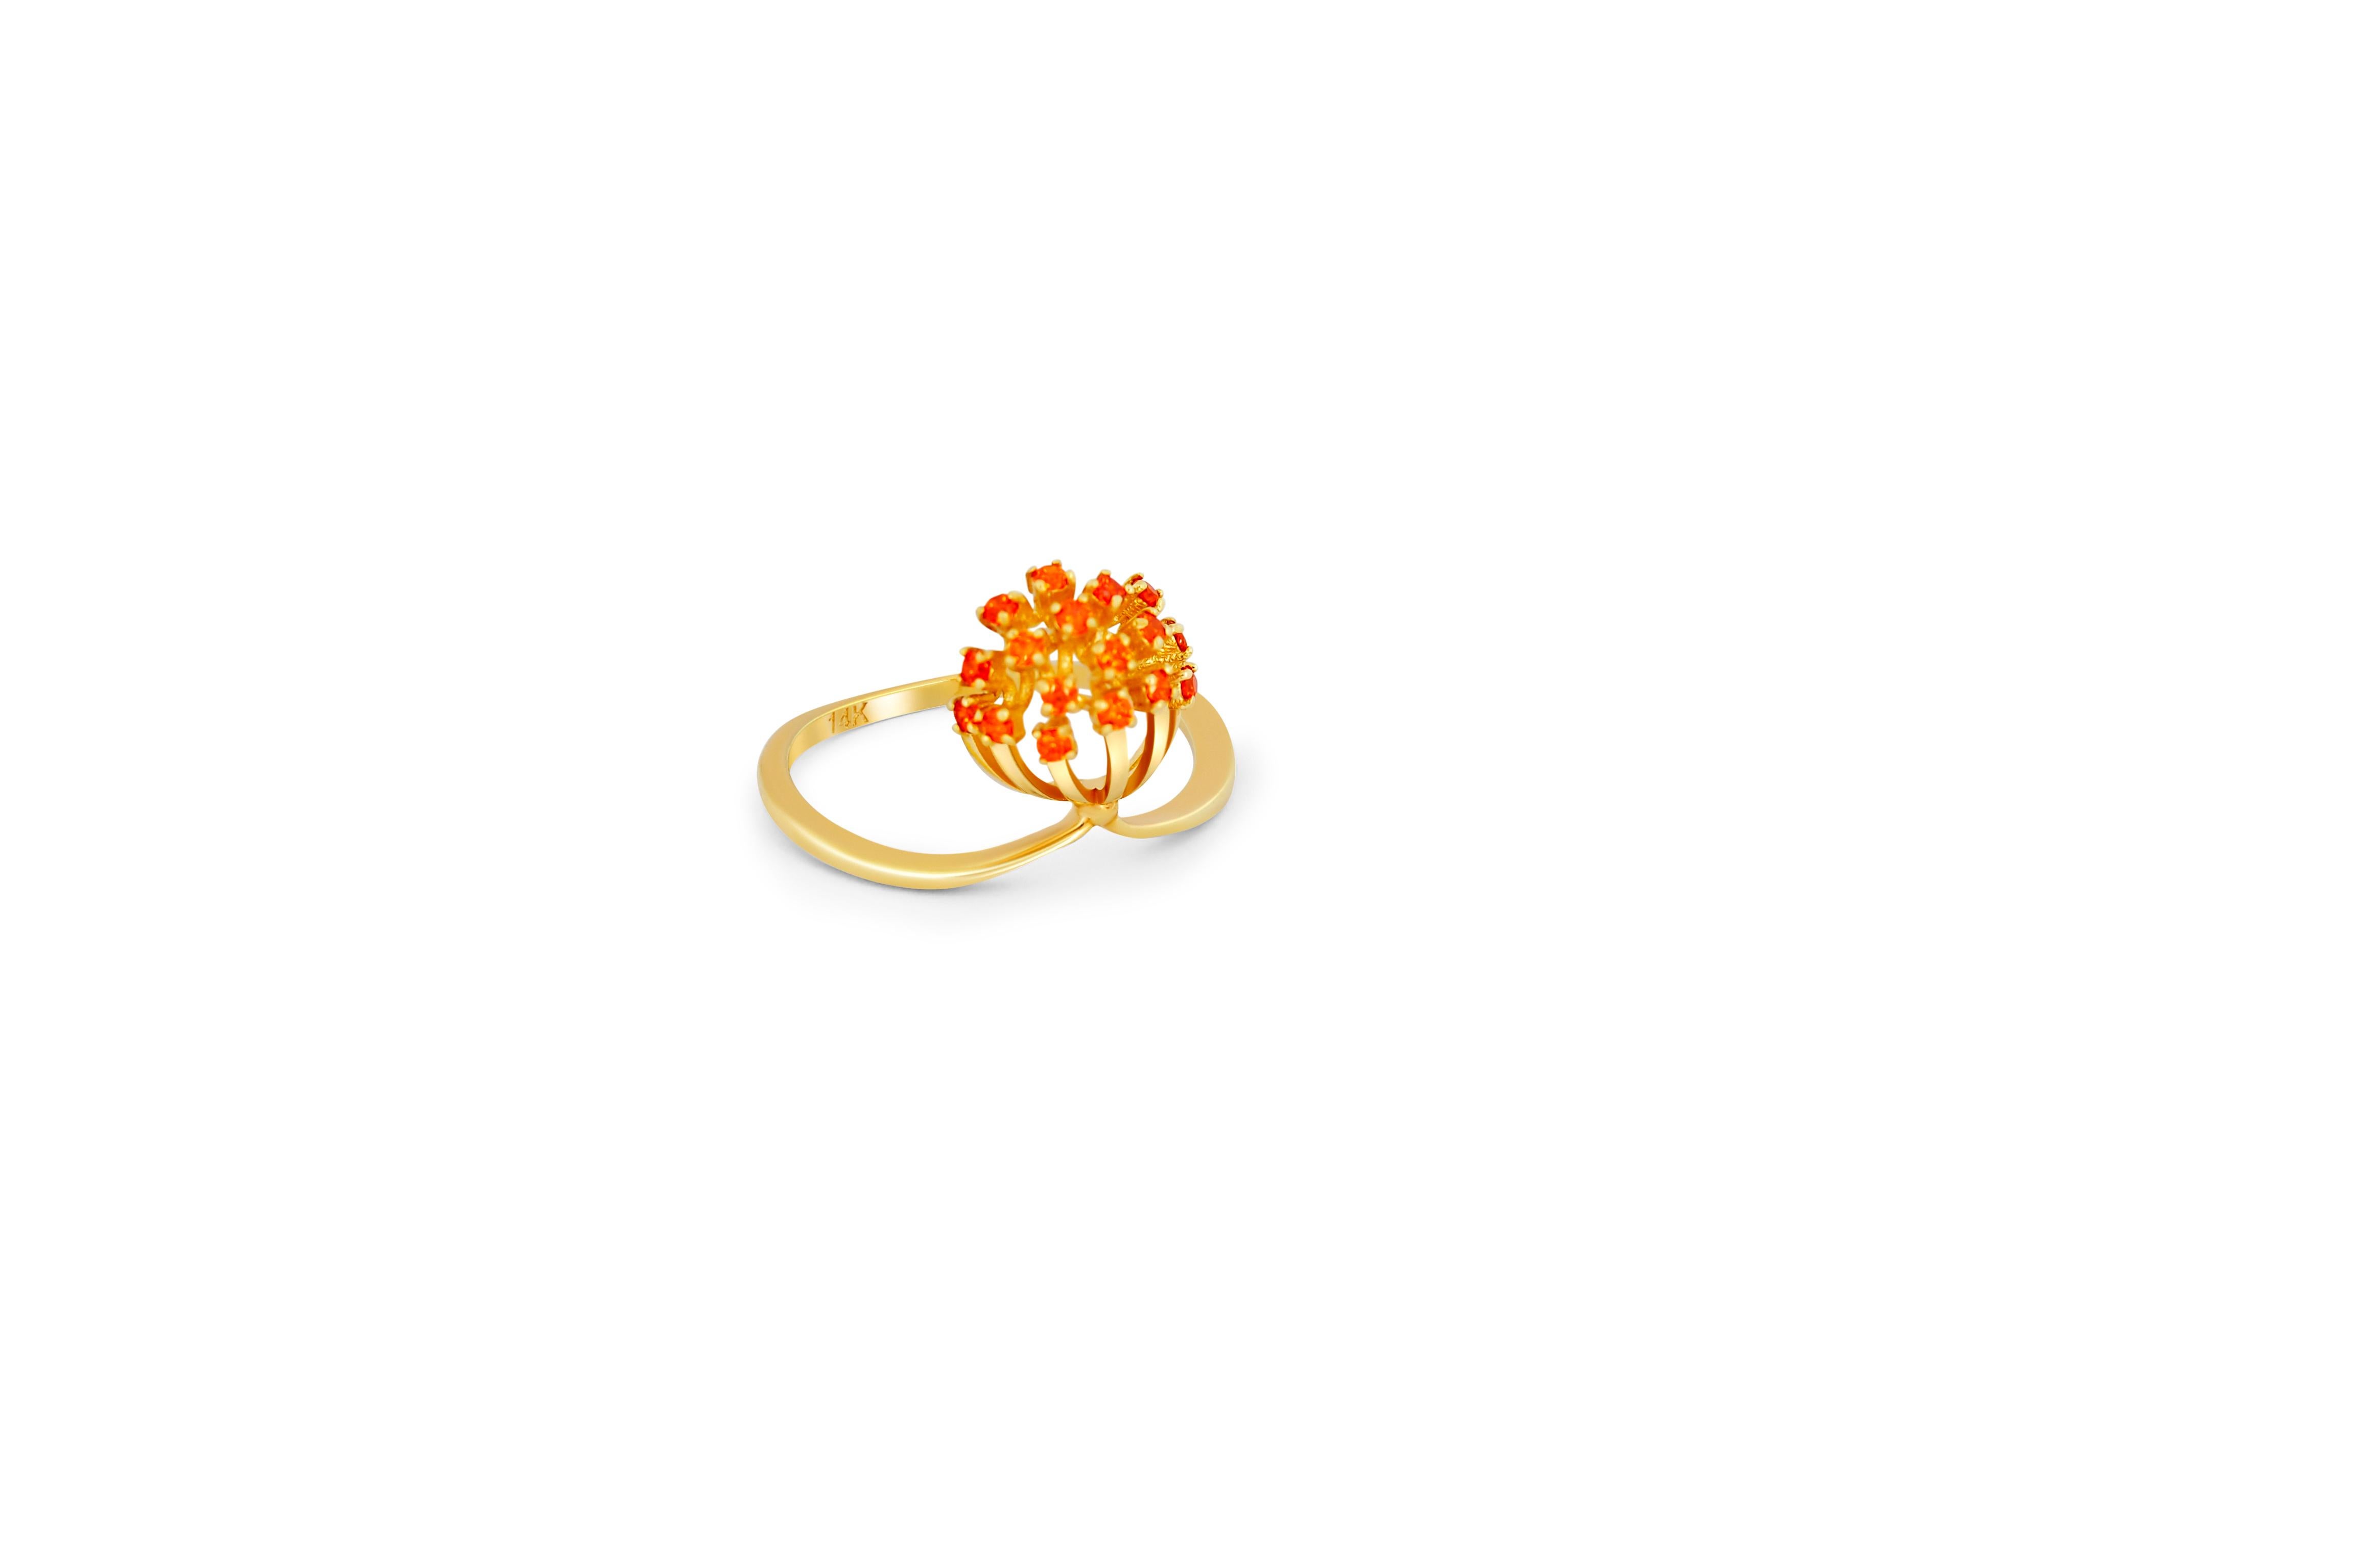 For Sale:  Dandelion flower ring with orange lab sapphires in 14k gold. 4